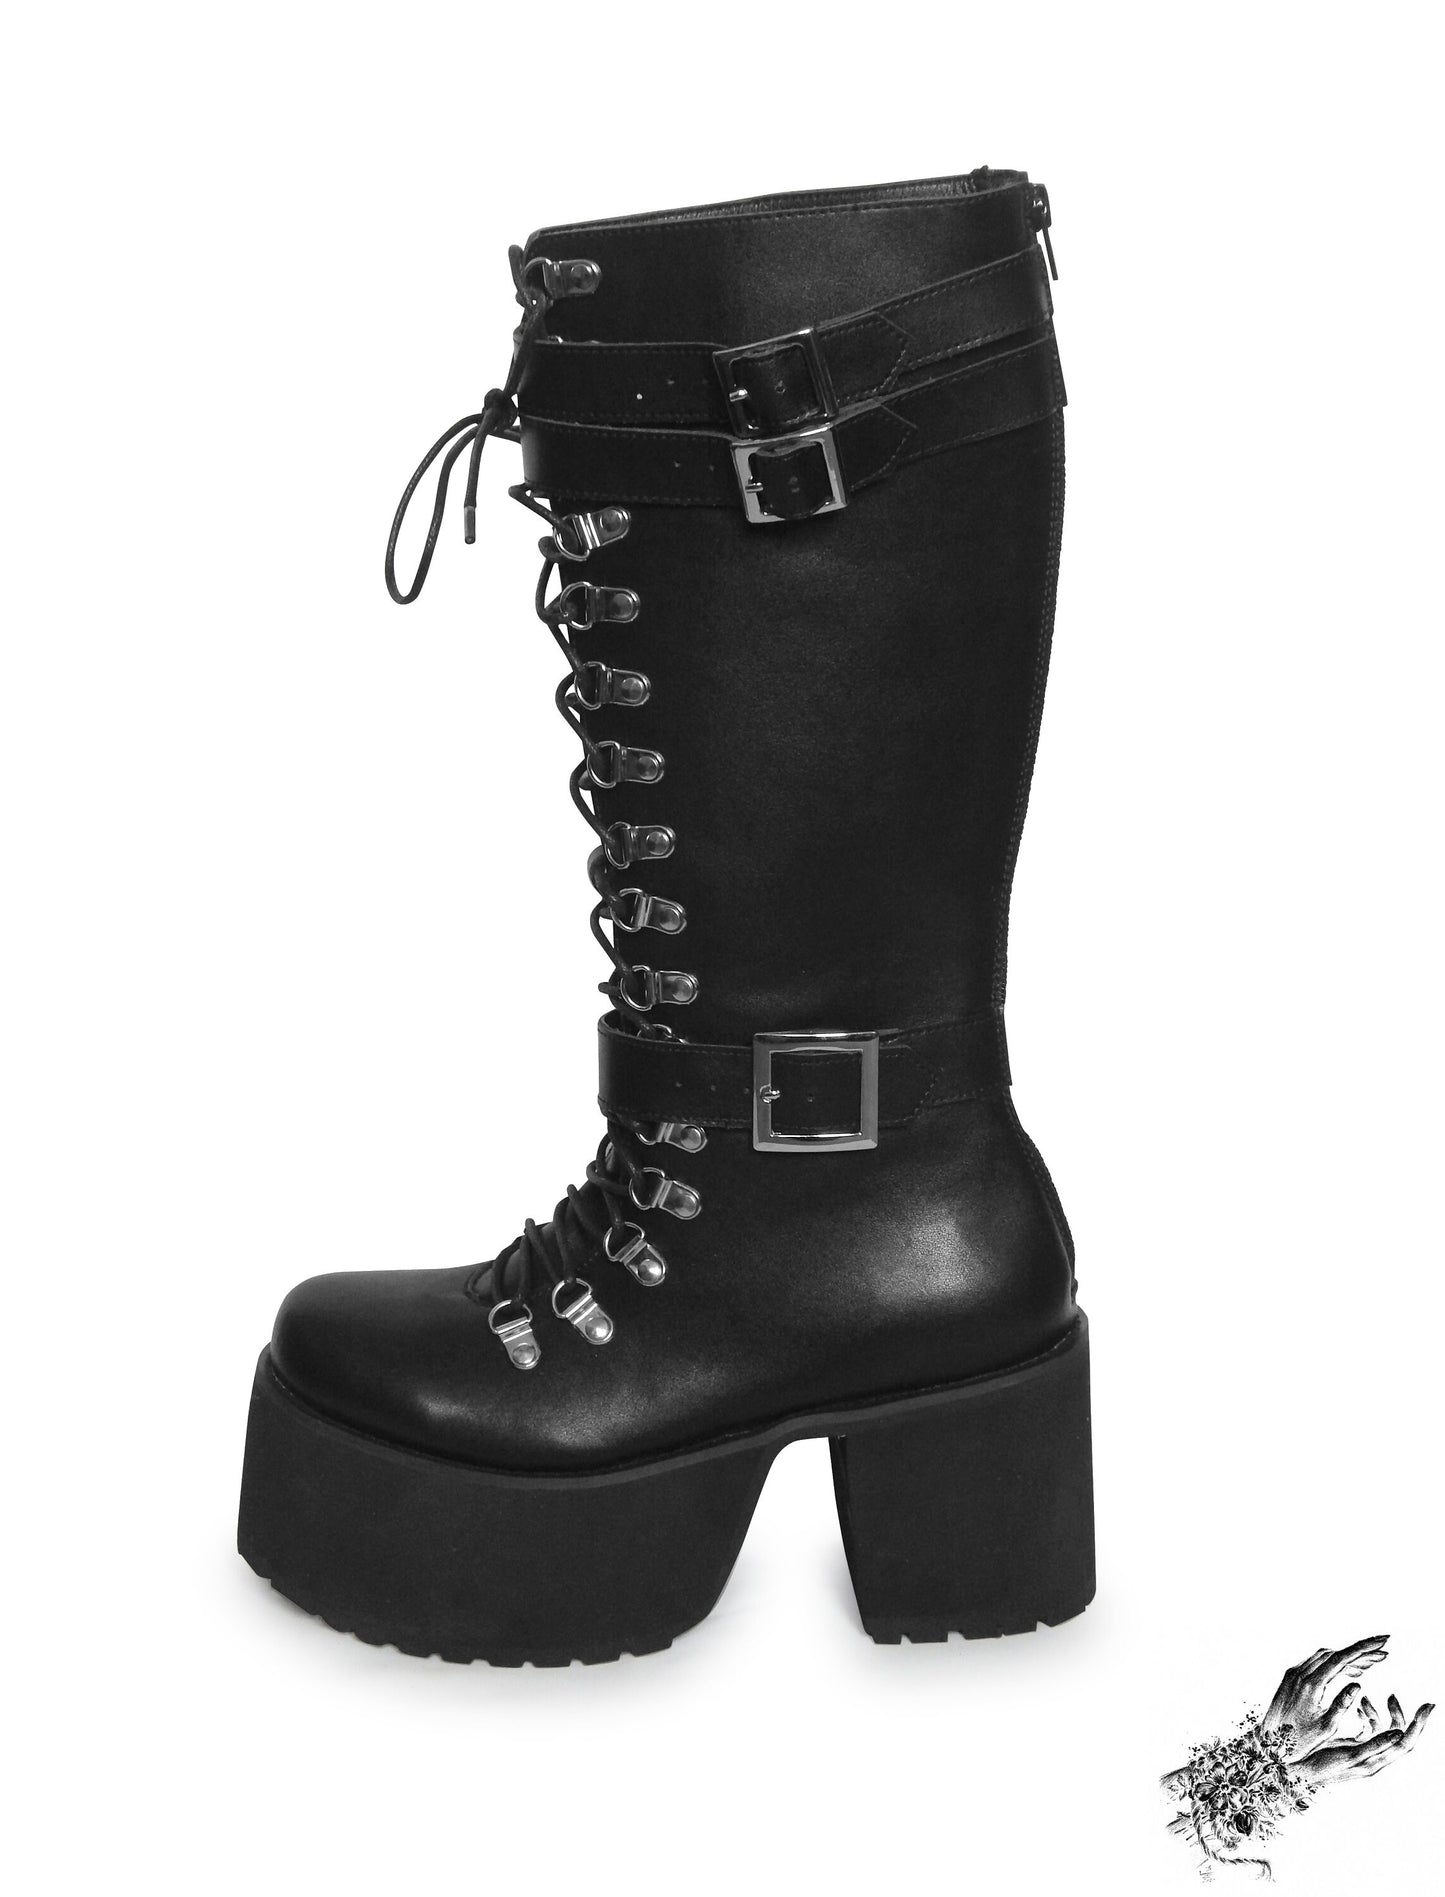 Black Matte Leather Knee High Platform Boots, "Lexa" Gothic Platform Boots